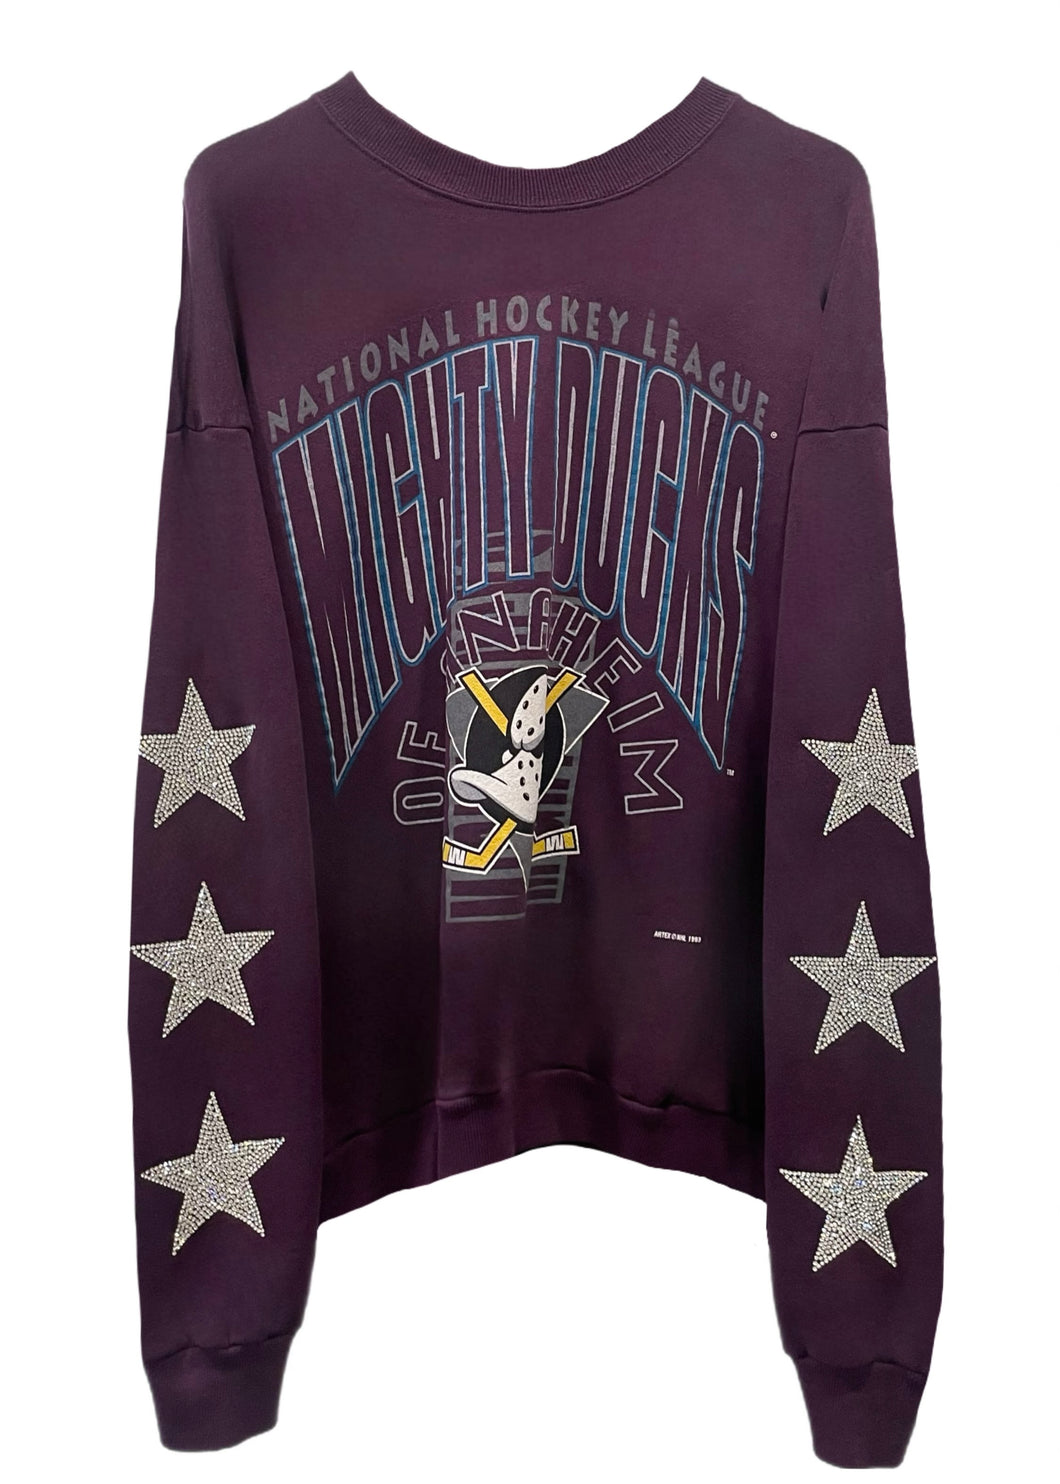 Anaheim Ducks, NHL One of a KIND Vintage “Mighty Ducks” Rare Find Sweatshirt with Three Crystal Star Design - Size: L/XL